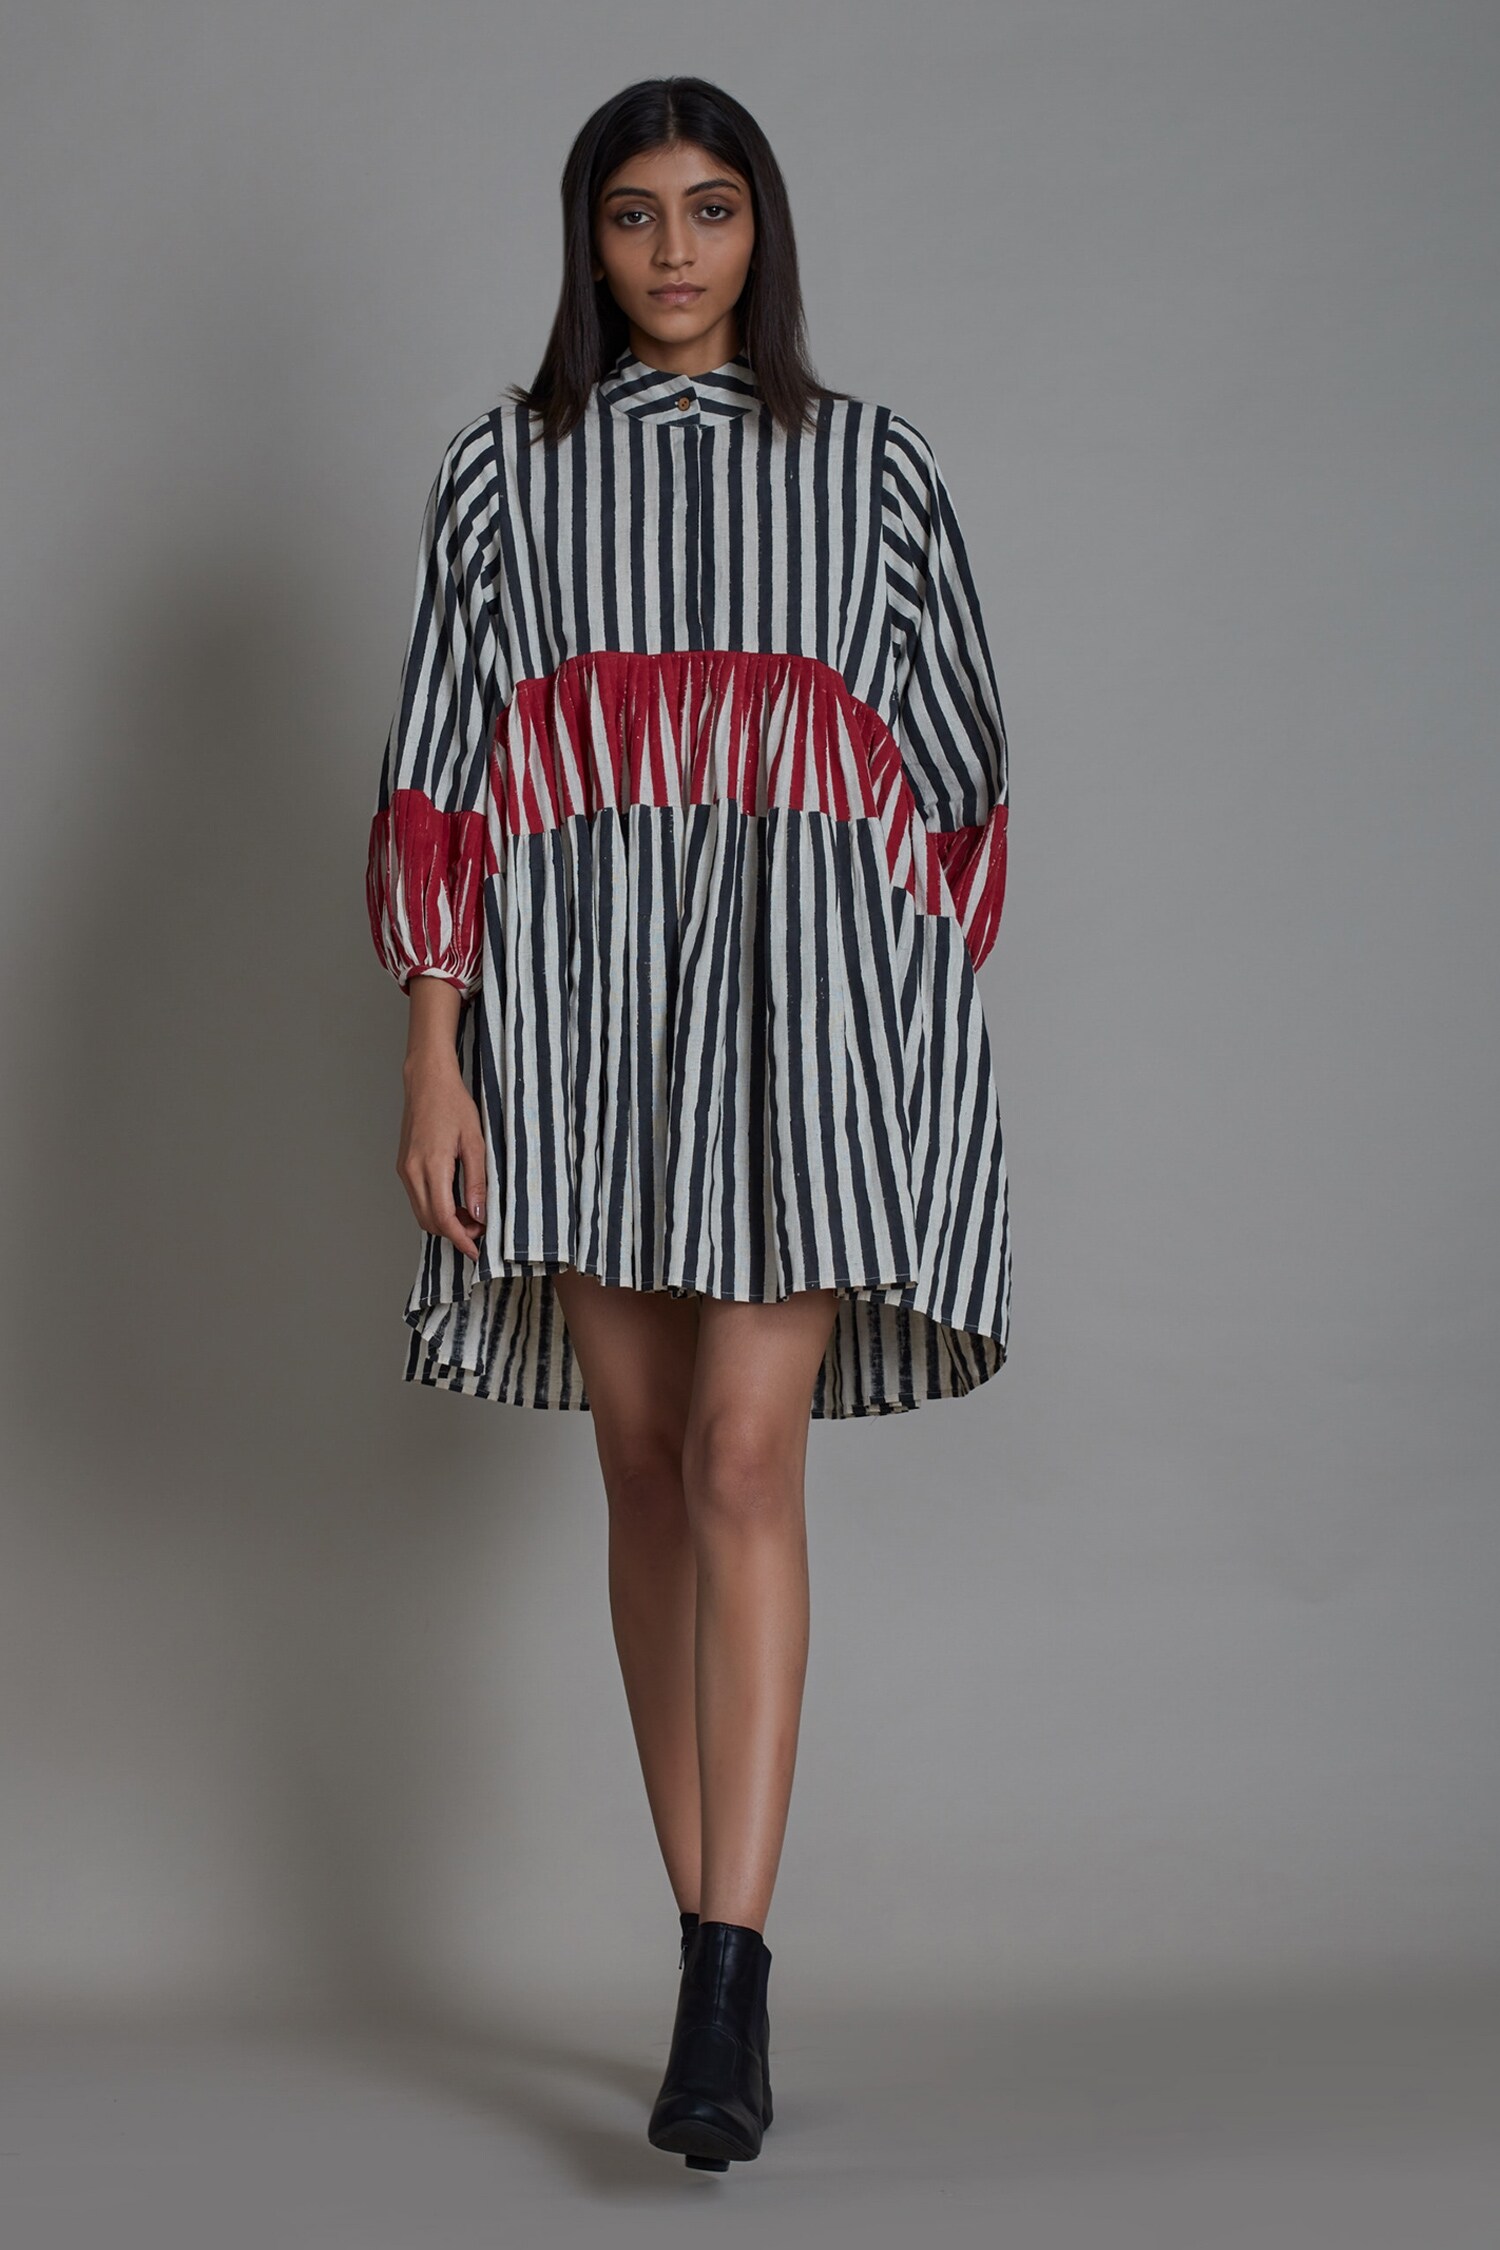 Black and White Cotton Striped Maxi Dress  Women Dresses Online   Colorauction